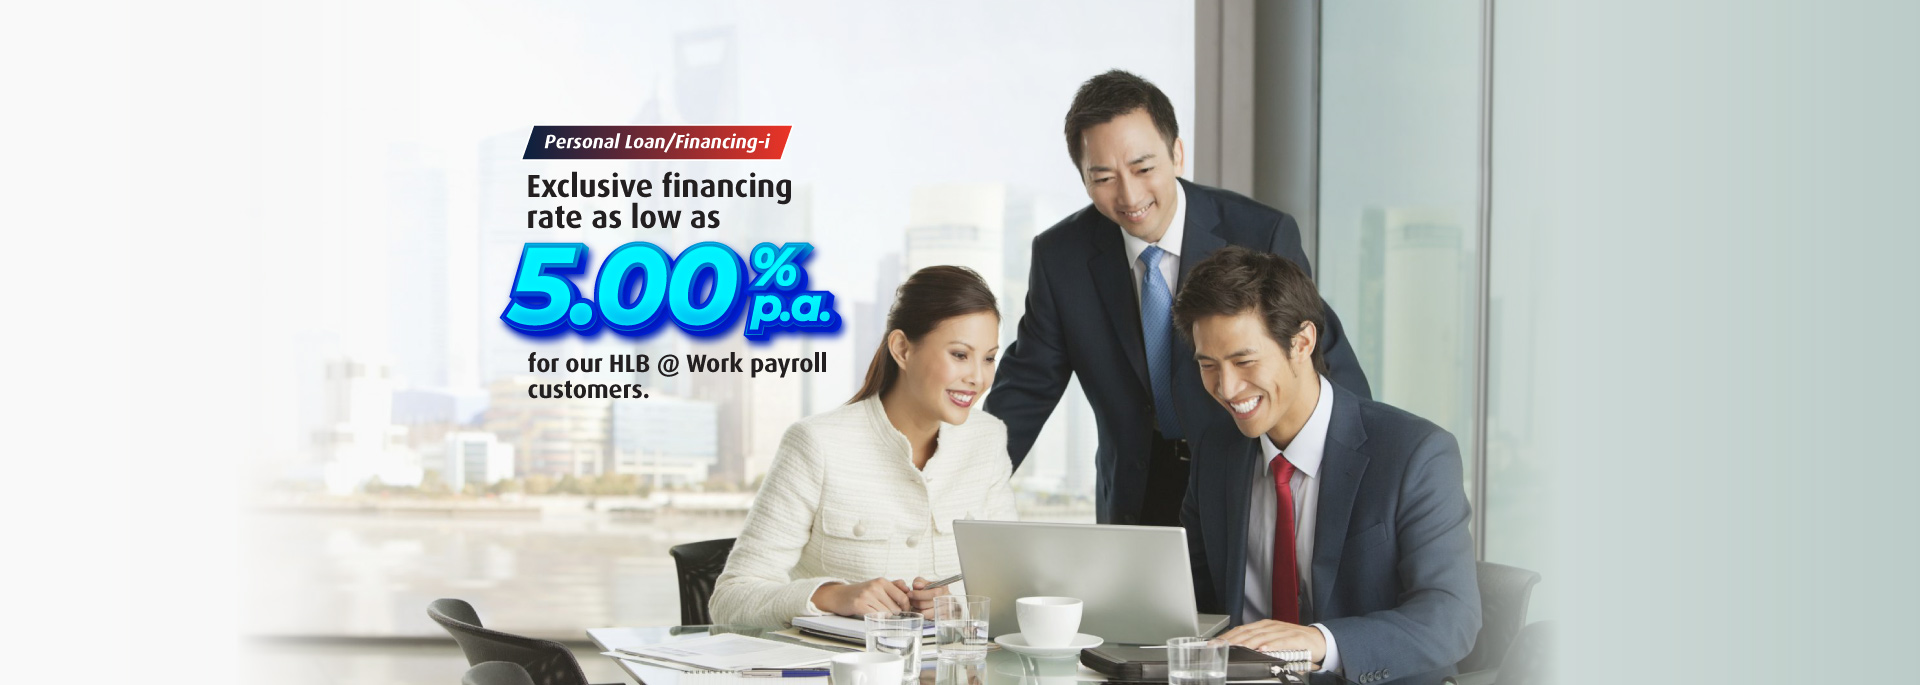 Personal Loan/Financing-i HLB@Work Payroll 22/23 Campaign